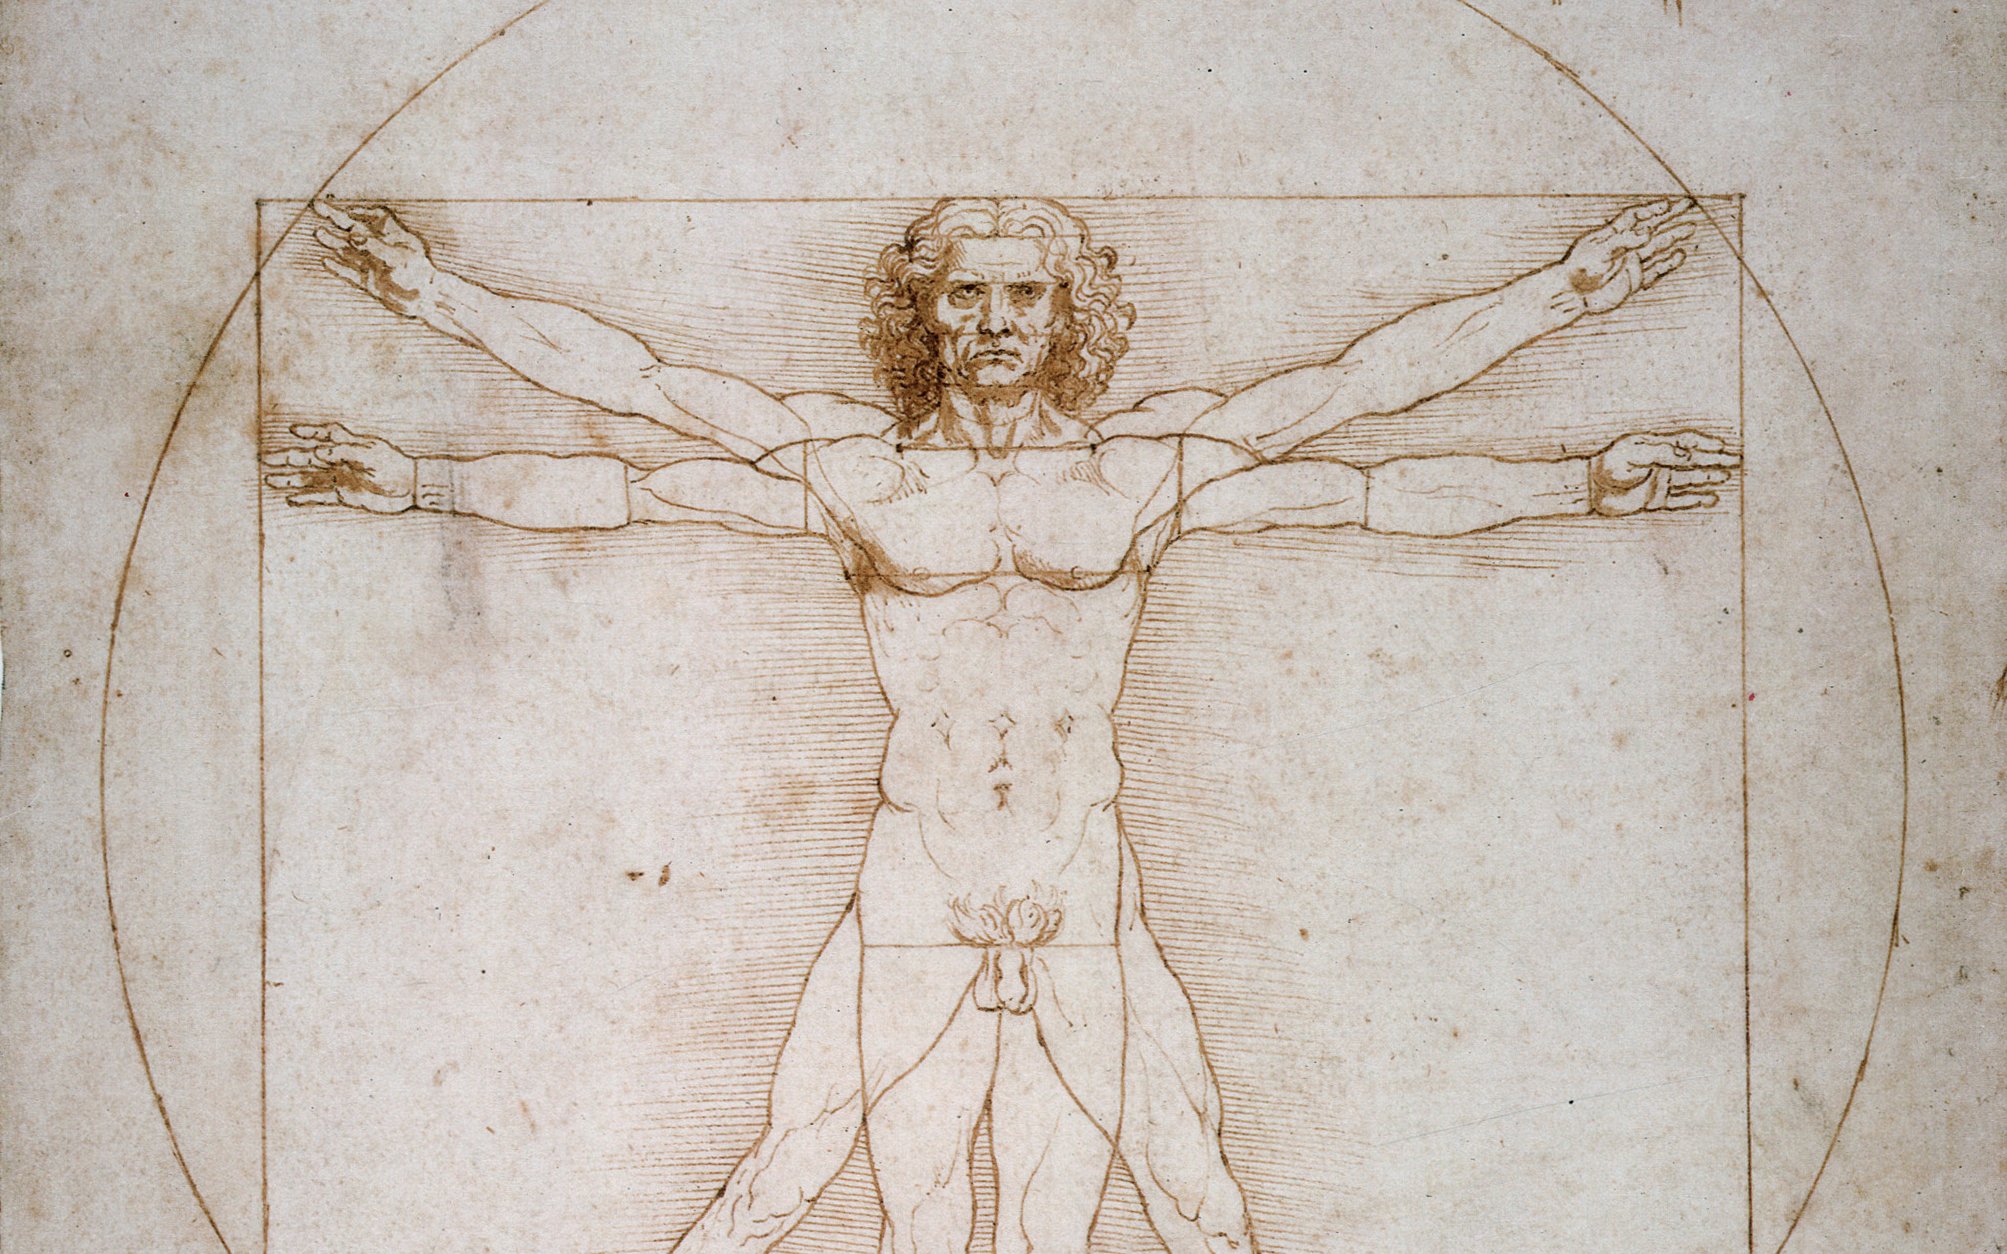 Leonardo da Vinci, “Vitruvian Man”